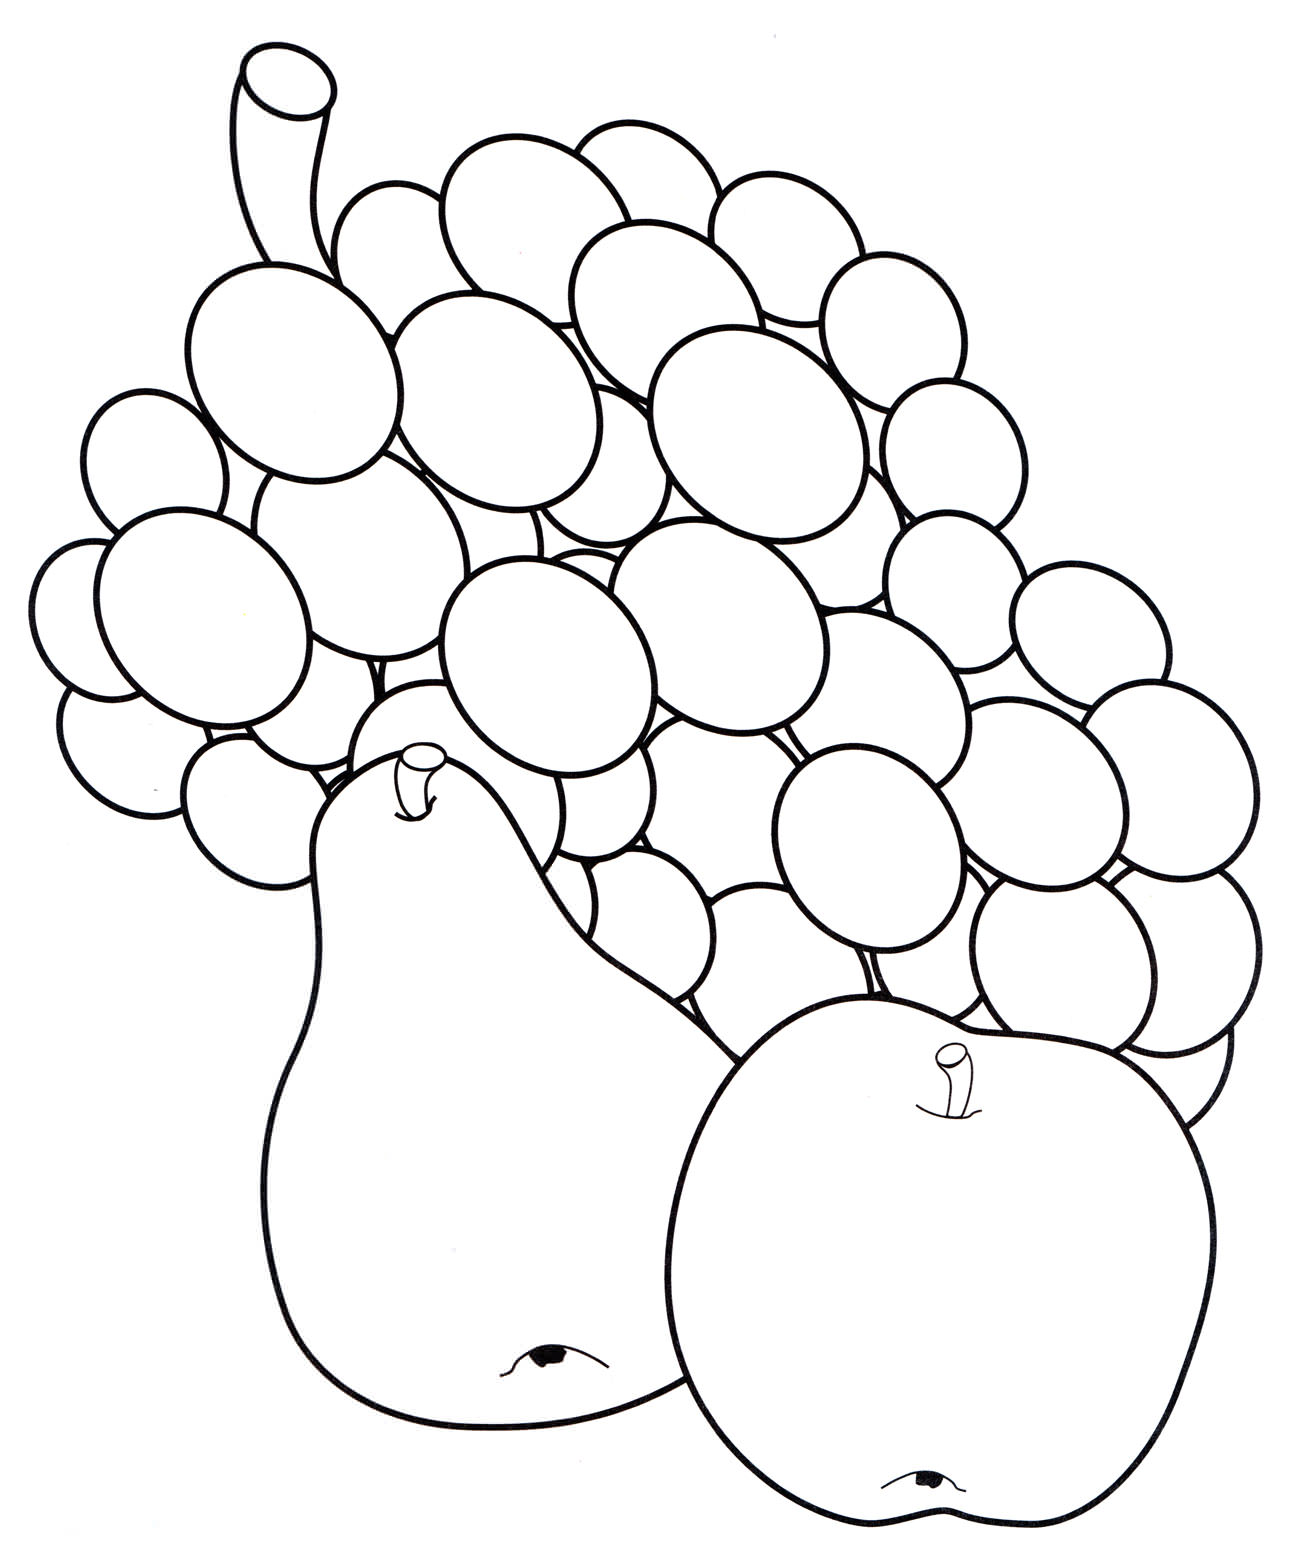 Розмальовка Виноград, яблуко та груша